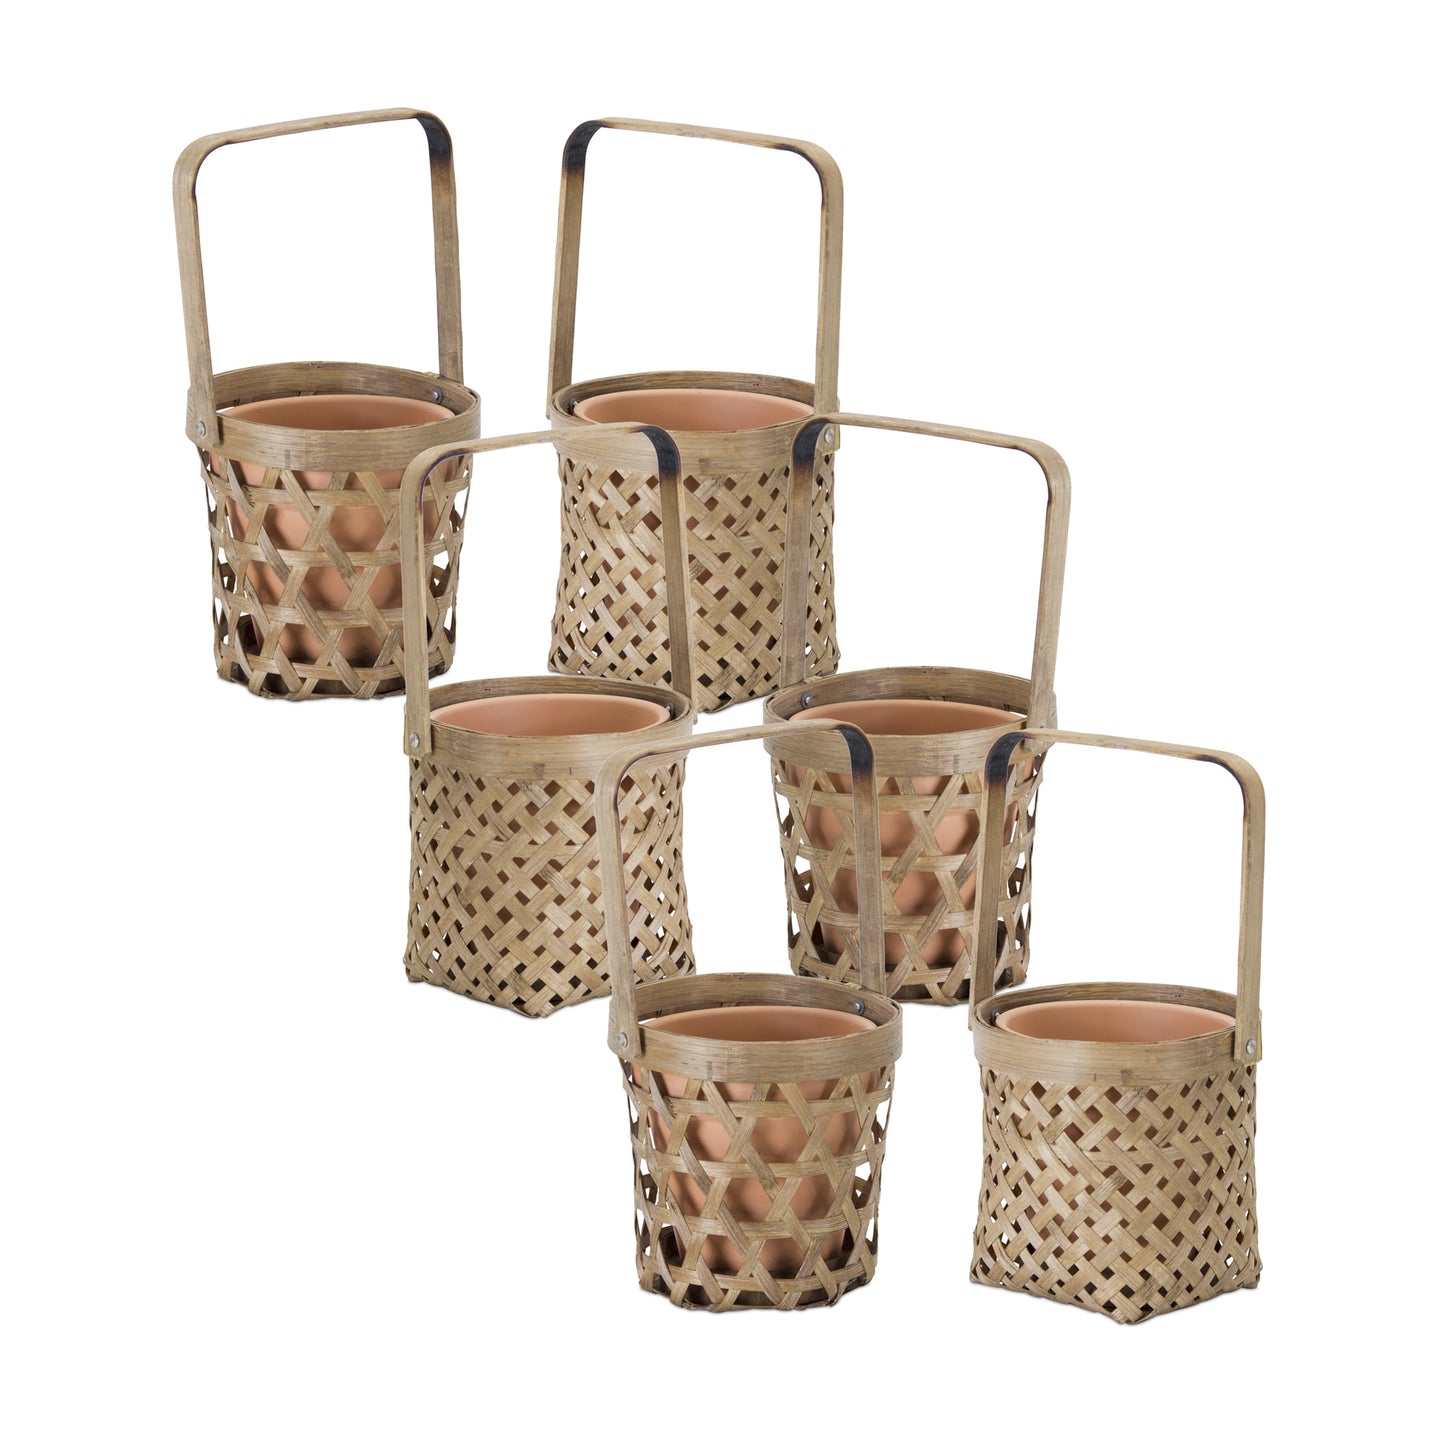 Woven Bamboo Basket with Terra Cotta Pot Insert (Set of 6)